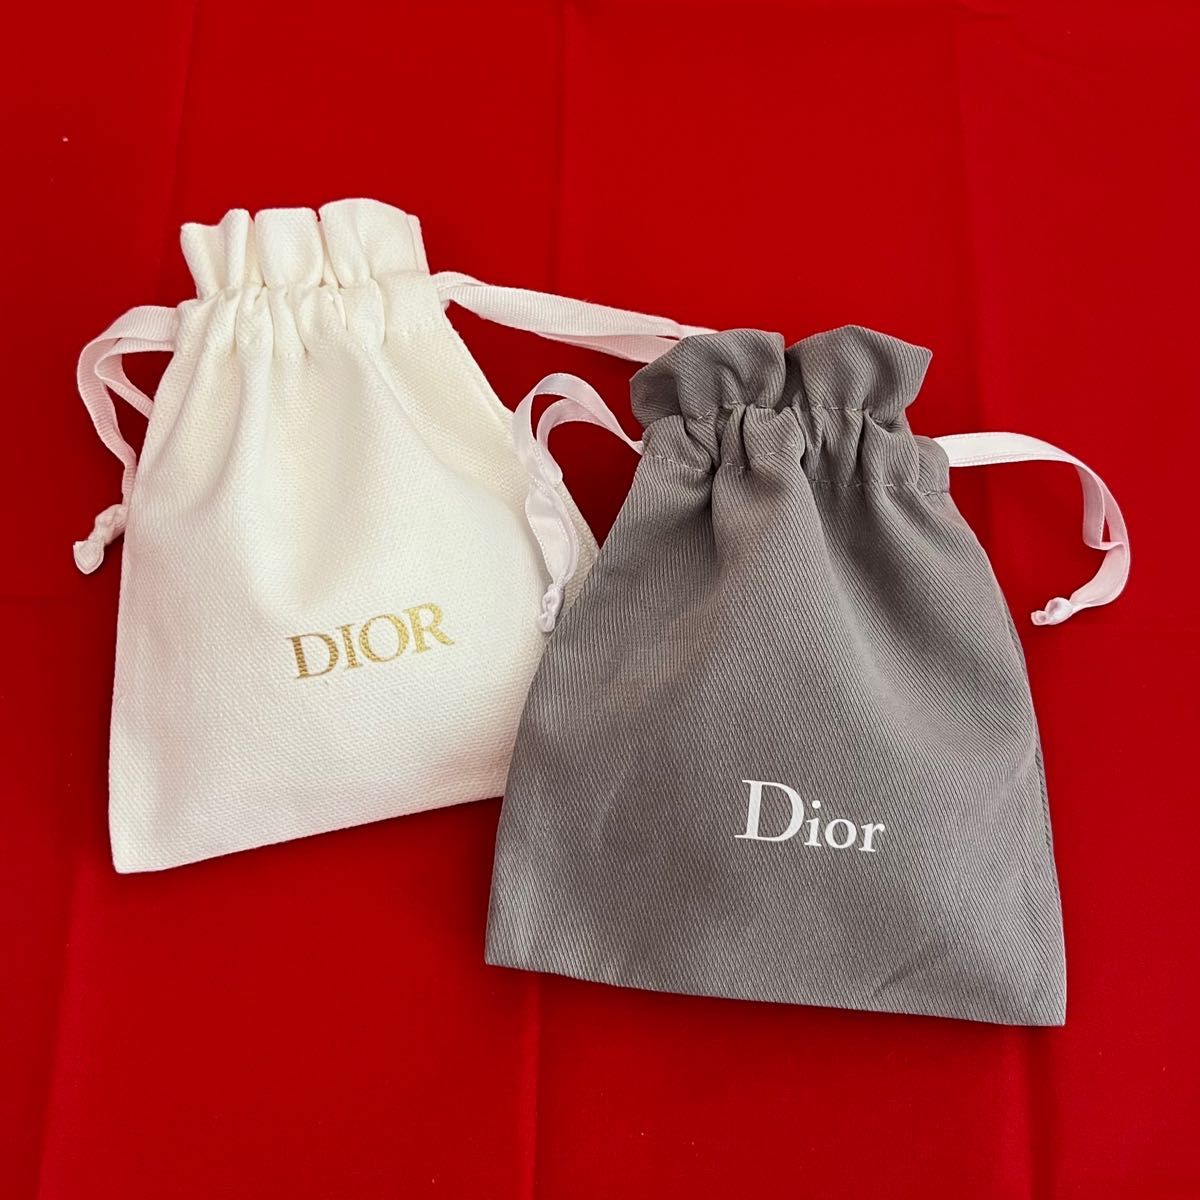 Dior ディオール 巾着袋 袋 グレー - ショップ袋